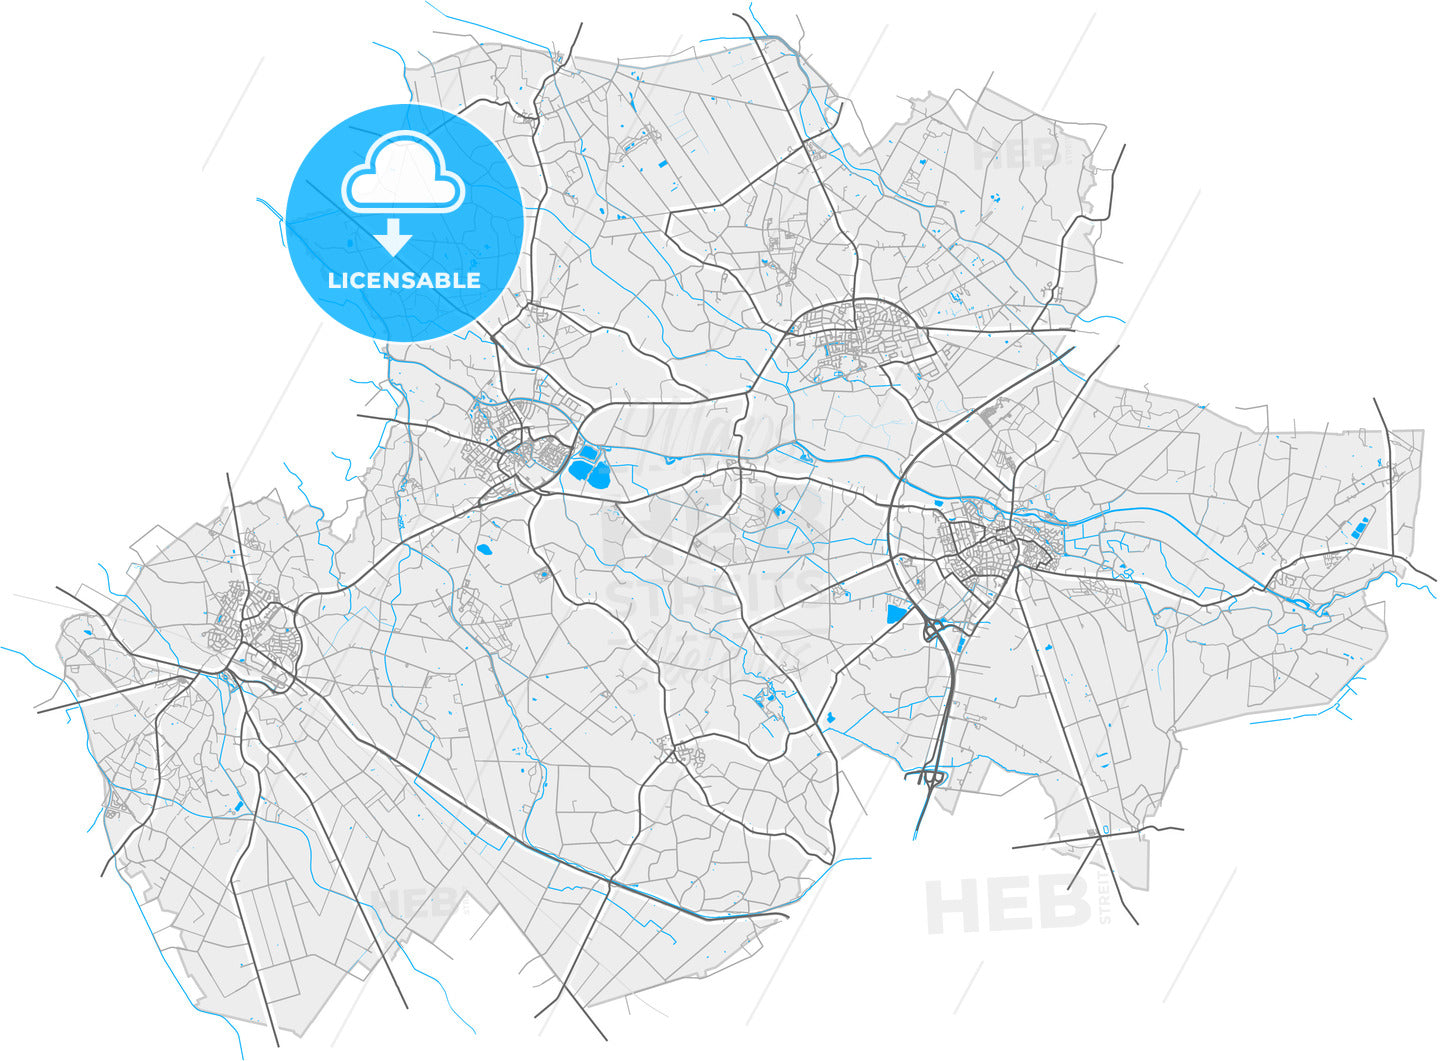 Berkelland, Gelderland, Netherlands, high quality vector map